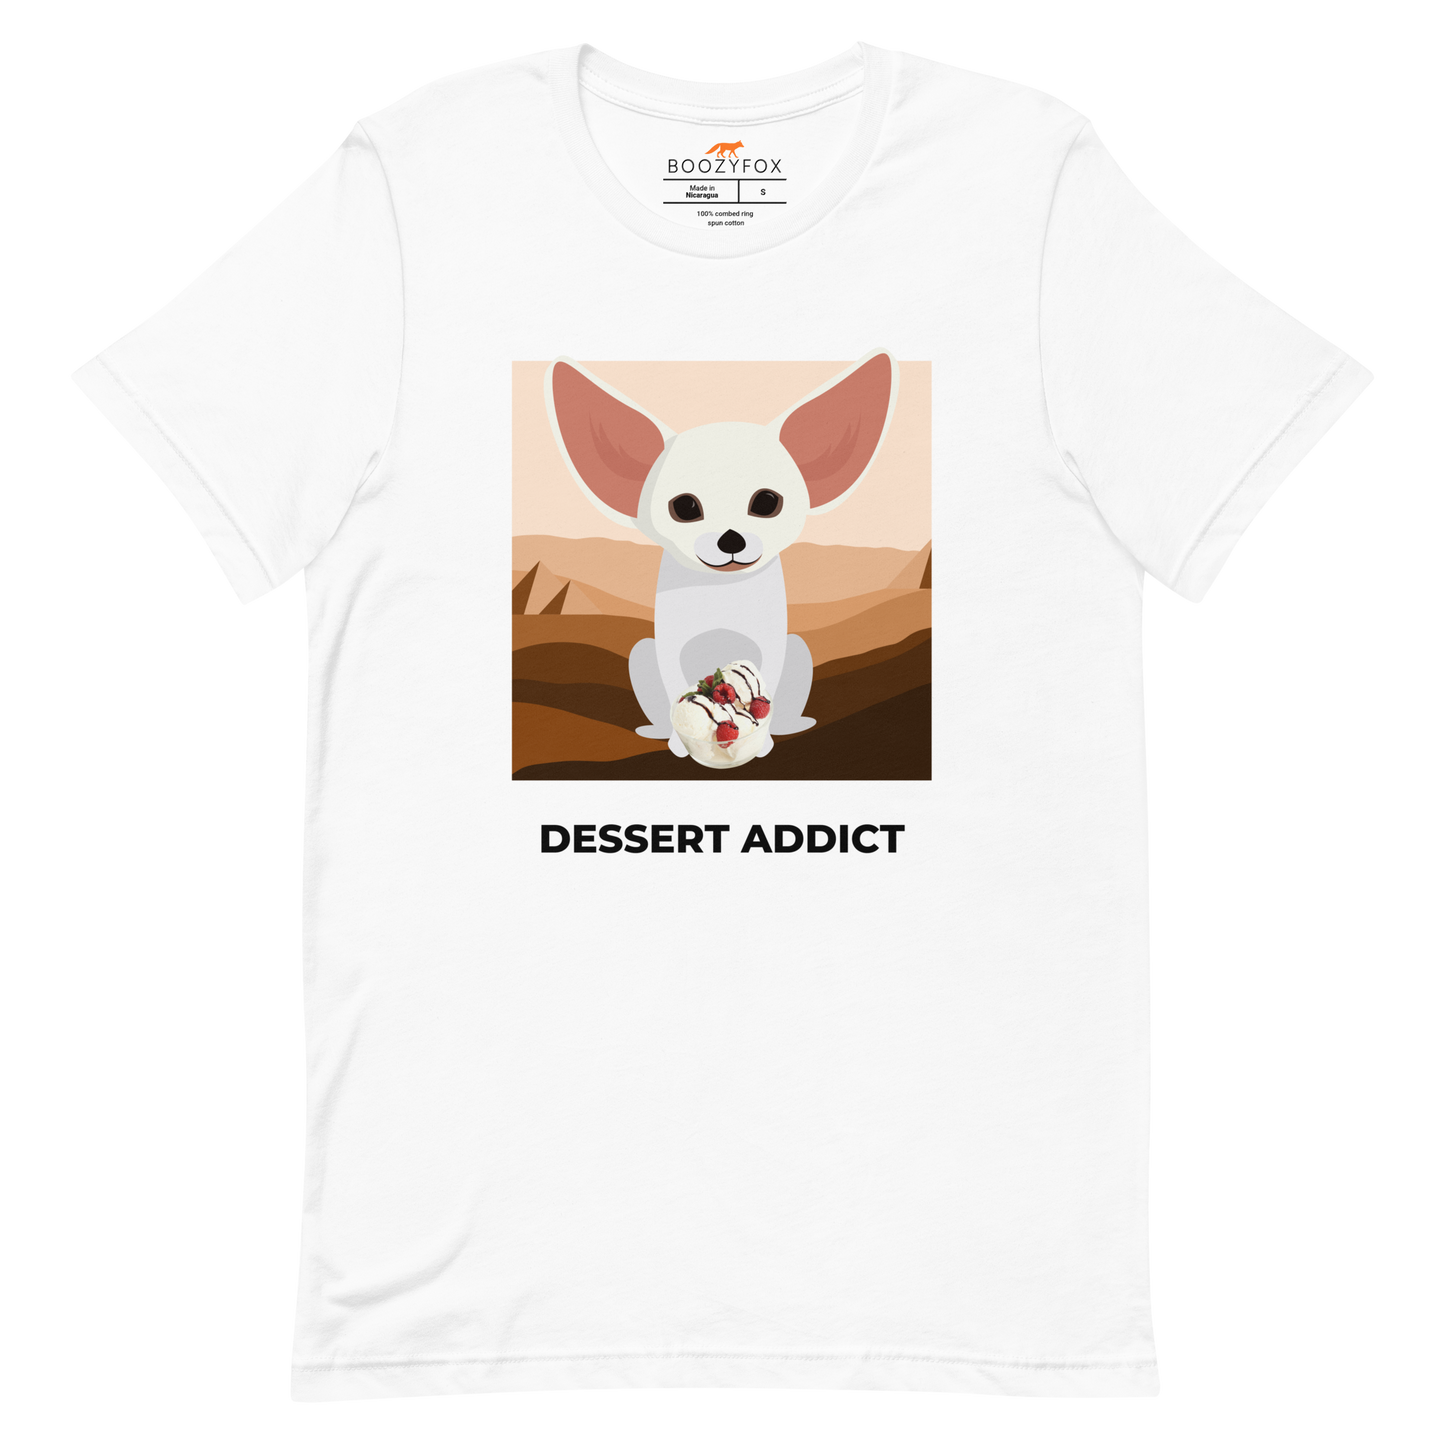 White Premium Fennec Fox T-Shirt featuring an adorable Dessert Addict graphic on the chest - Cute Graphic Fennec Fox Tees - Boozy Fox